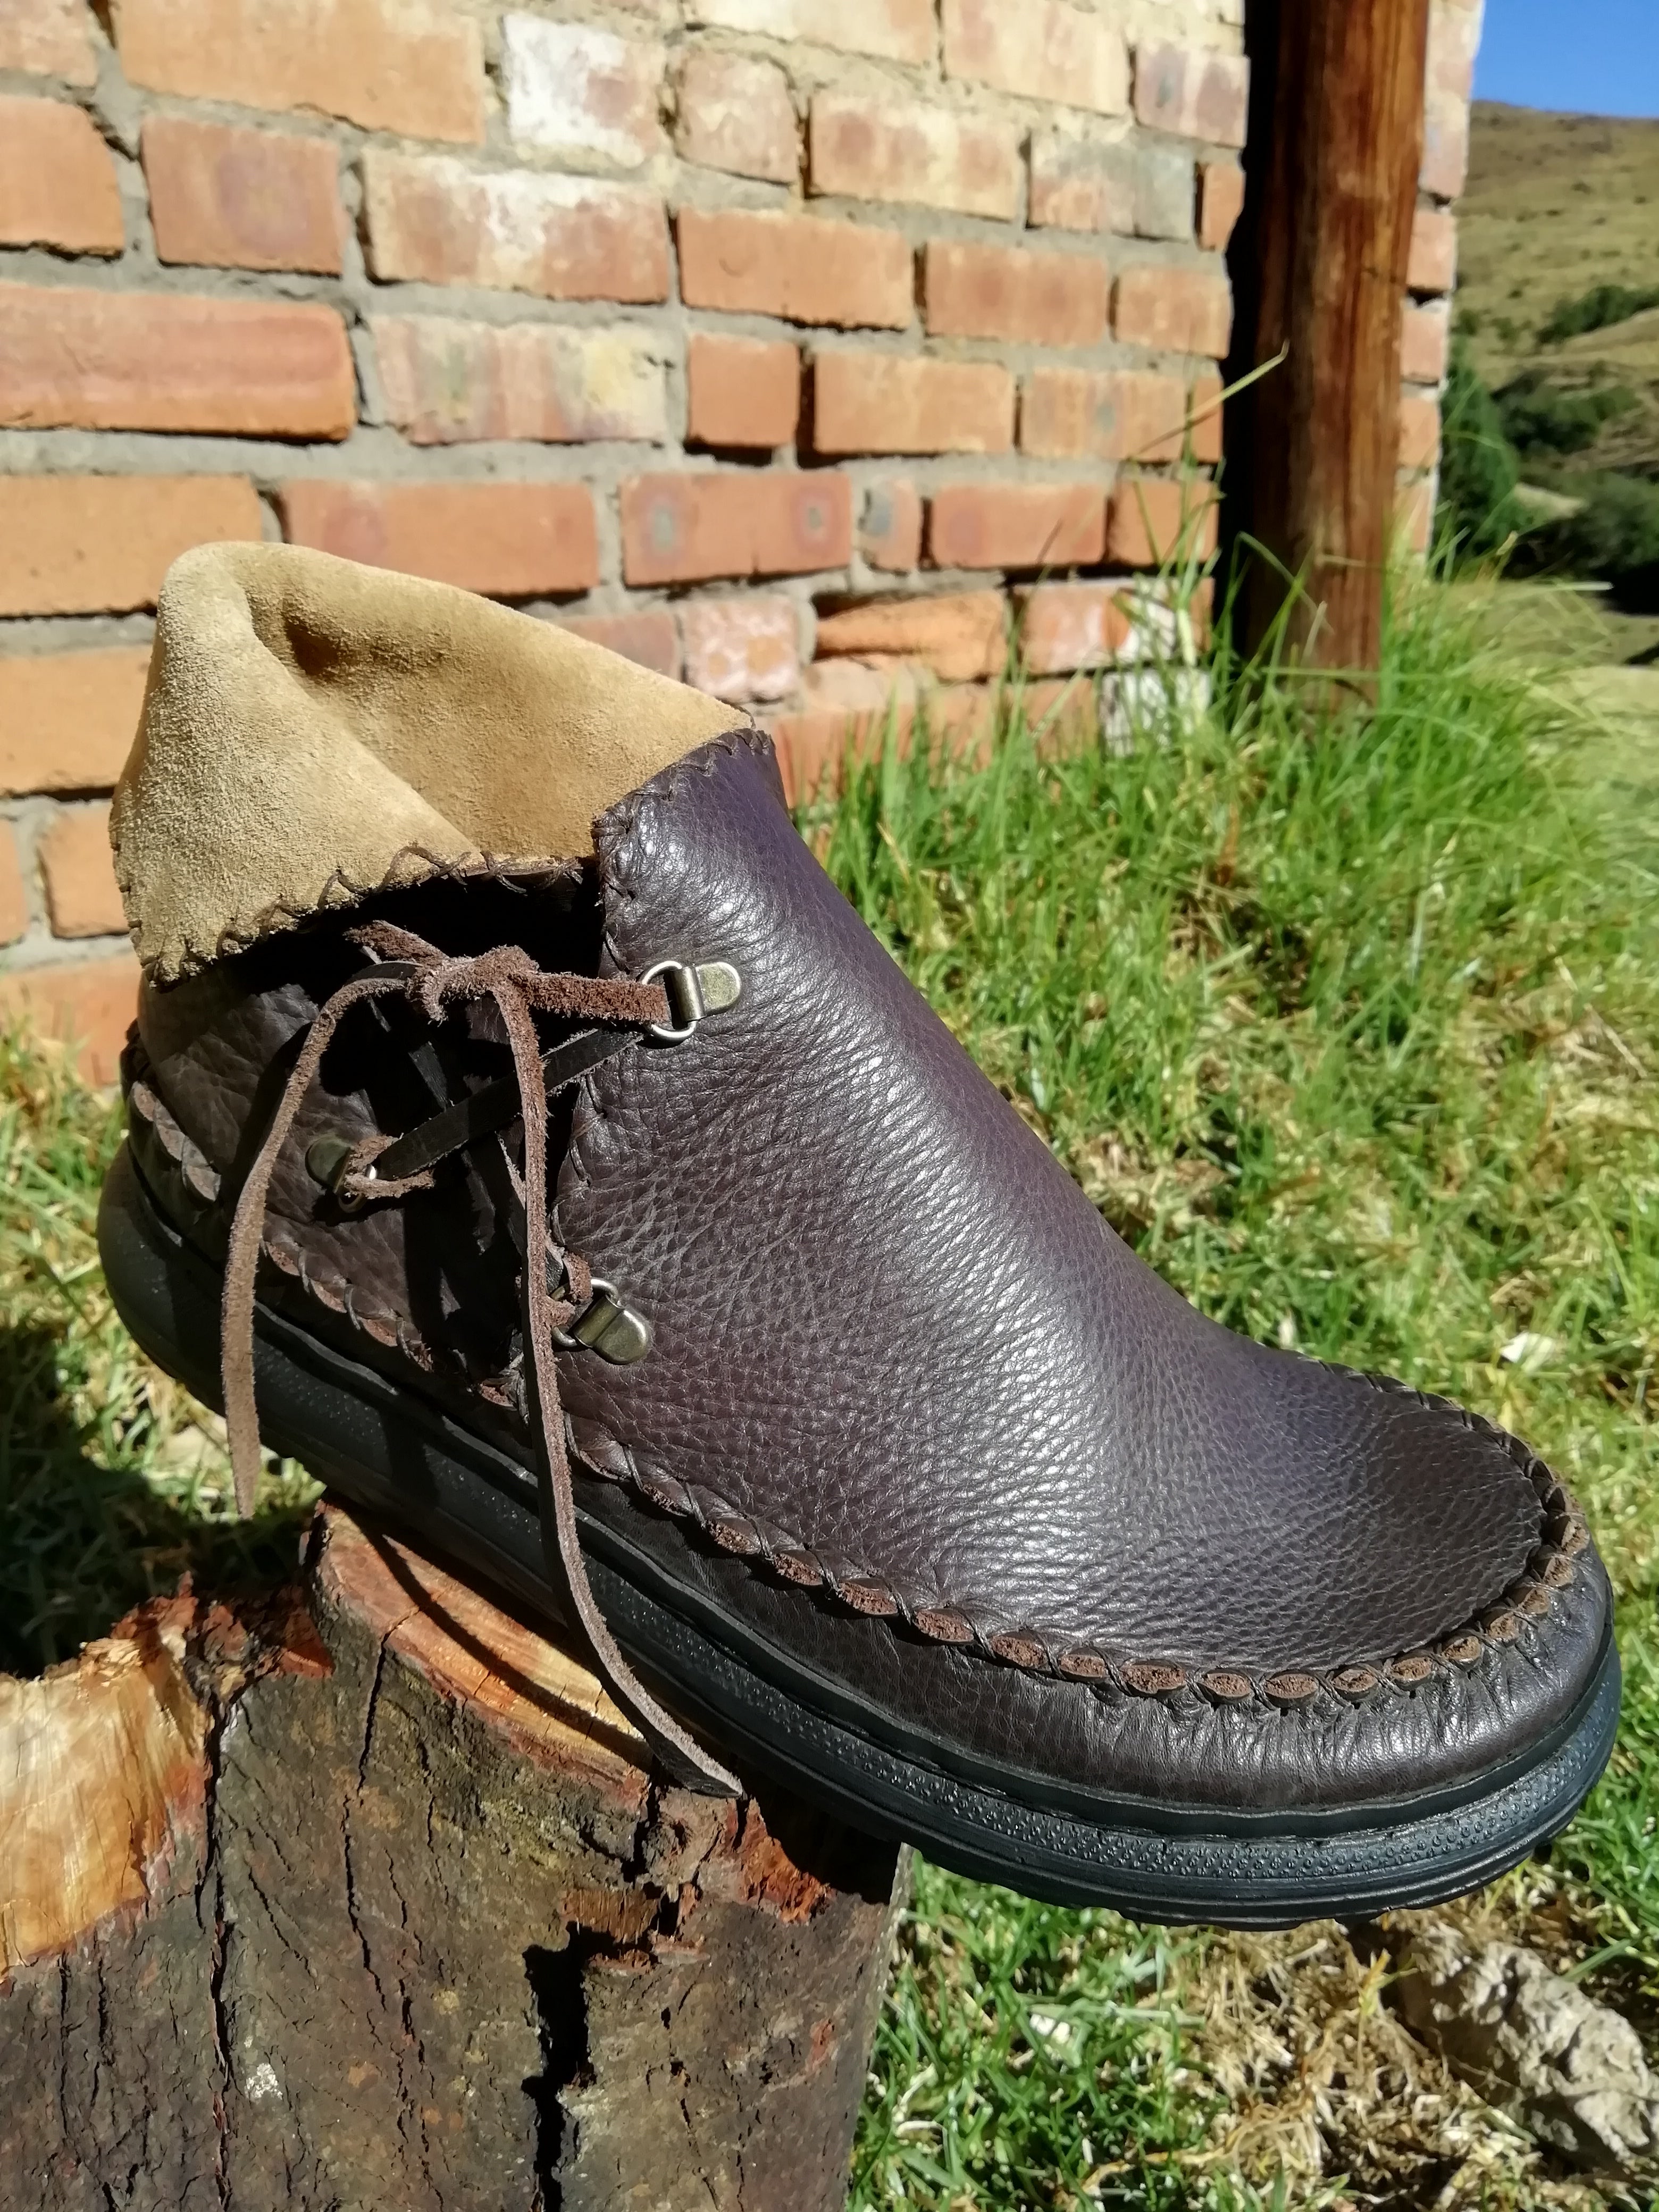 Custom Sioux Shoe